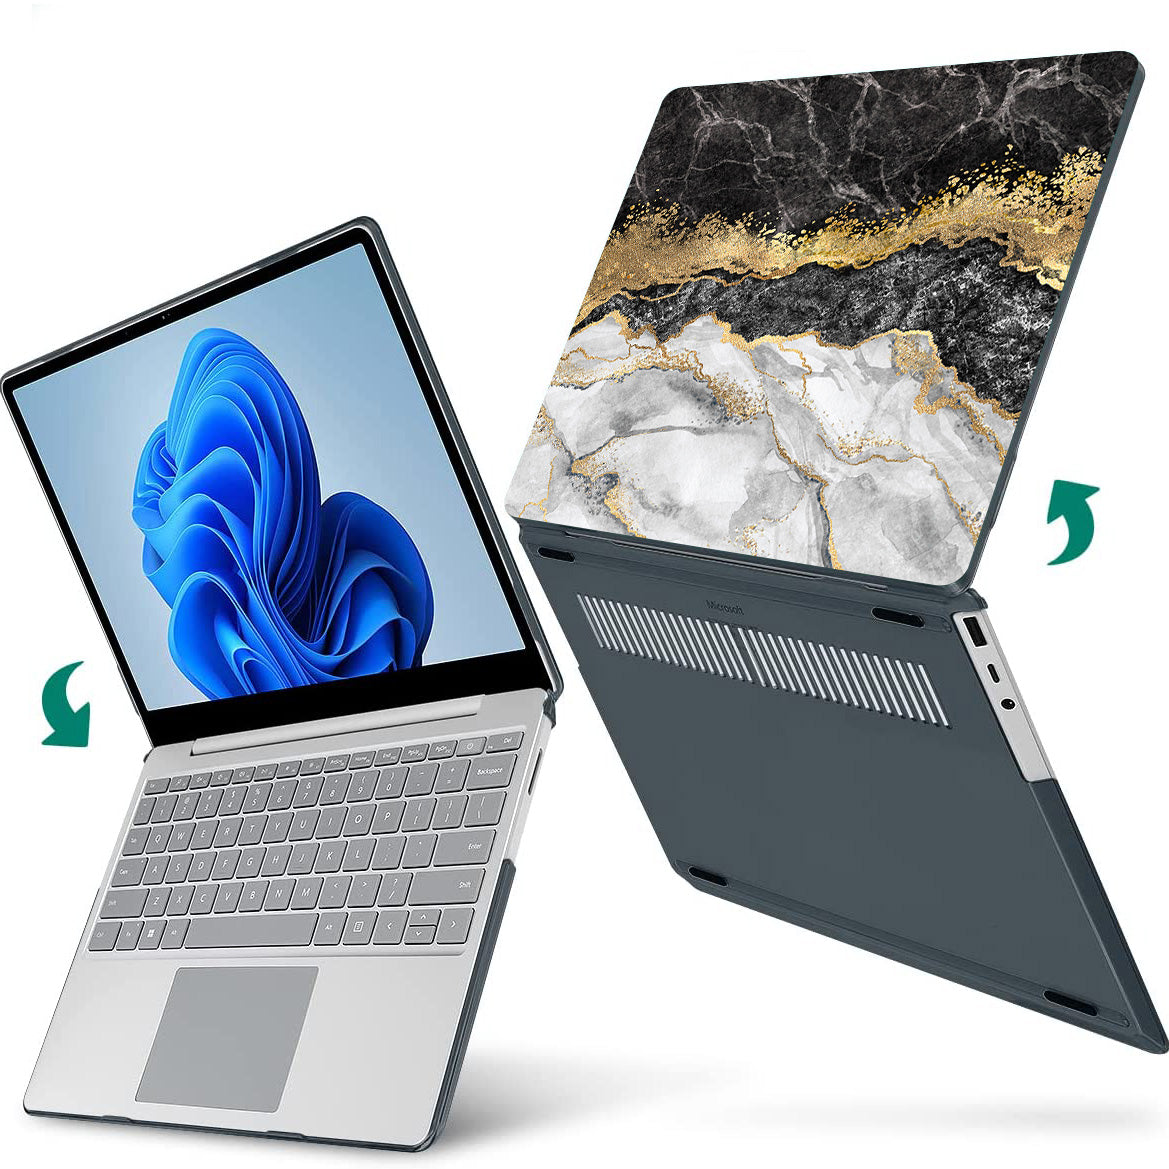 Gold River  Microsoft Surface Laptop Case